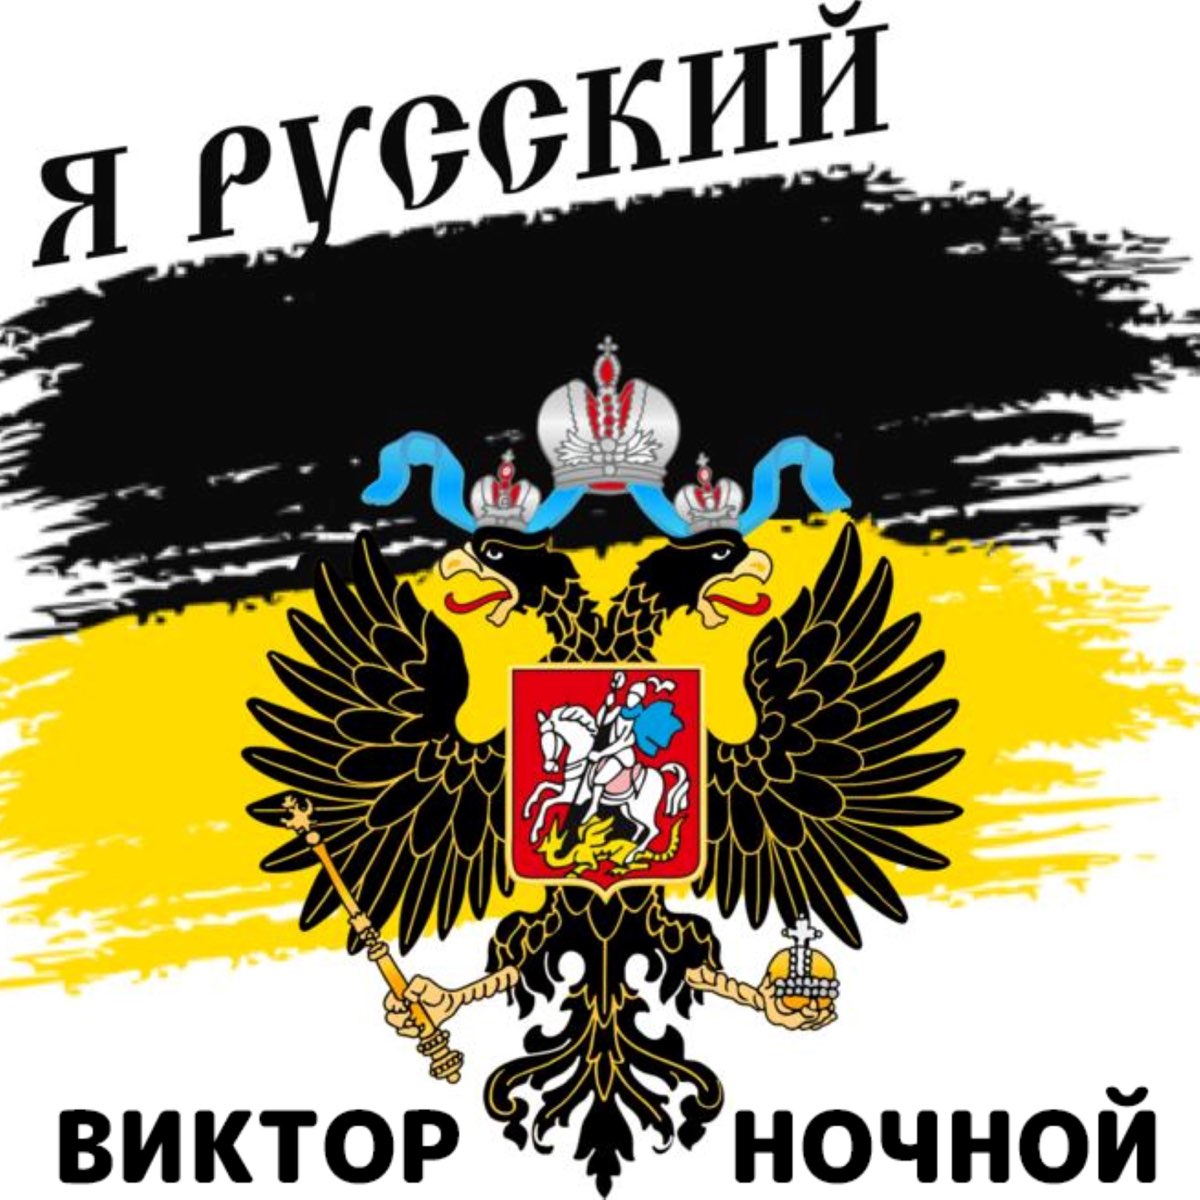 Имперский флаг Российской империи я русский. Я русский. Надпись я русский. Россия для русских. Я русский 1 час